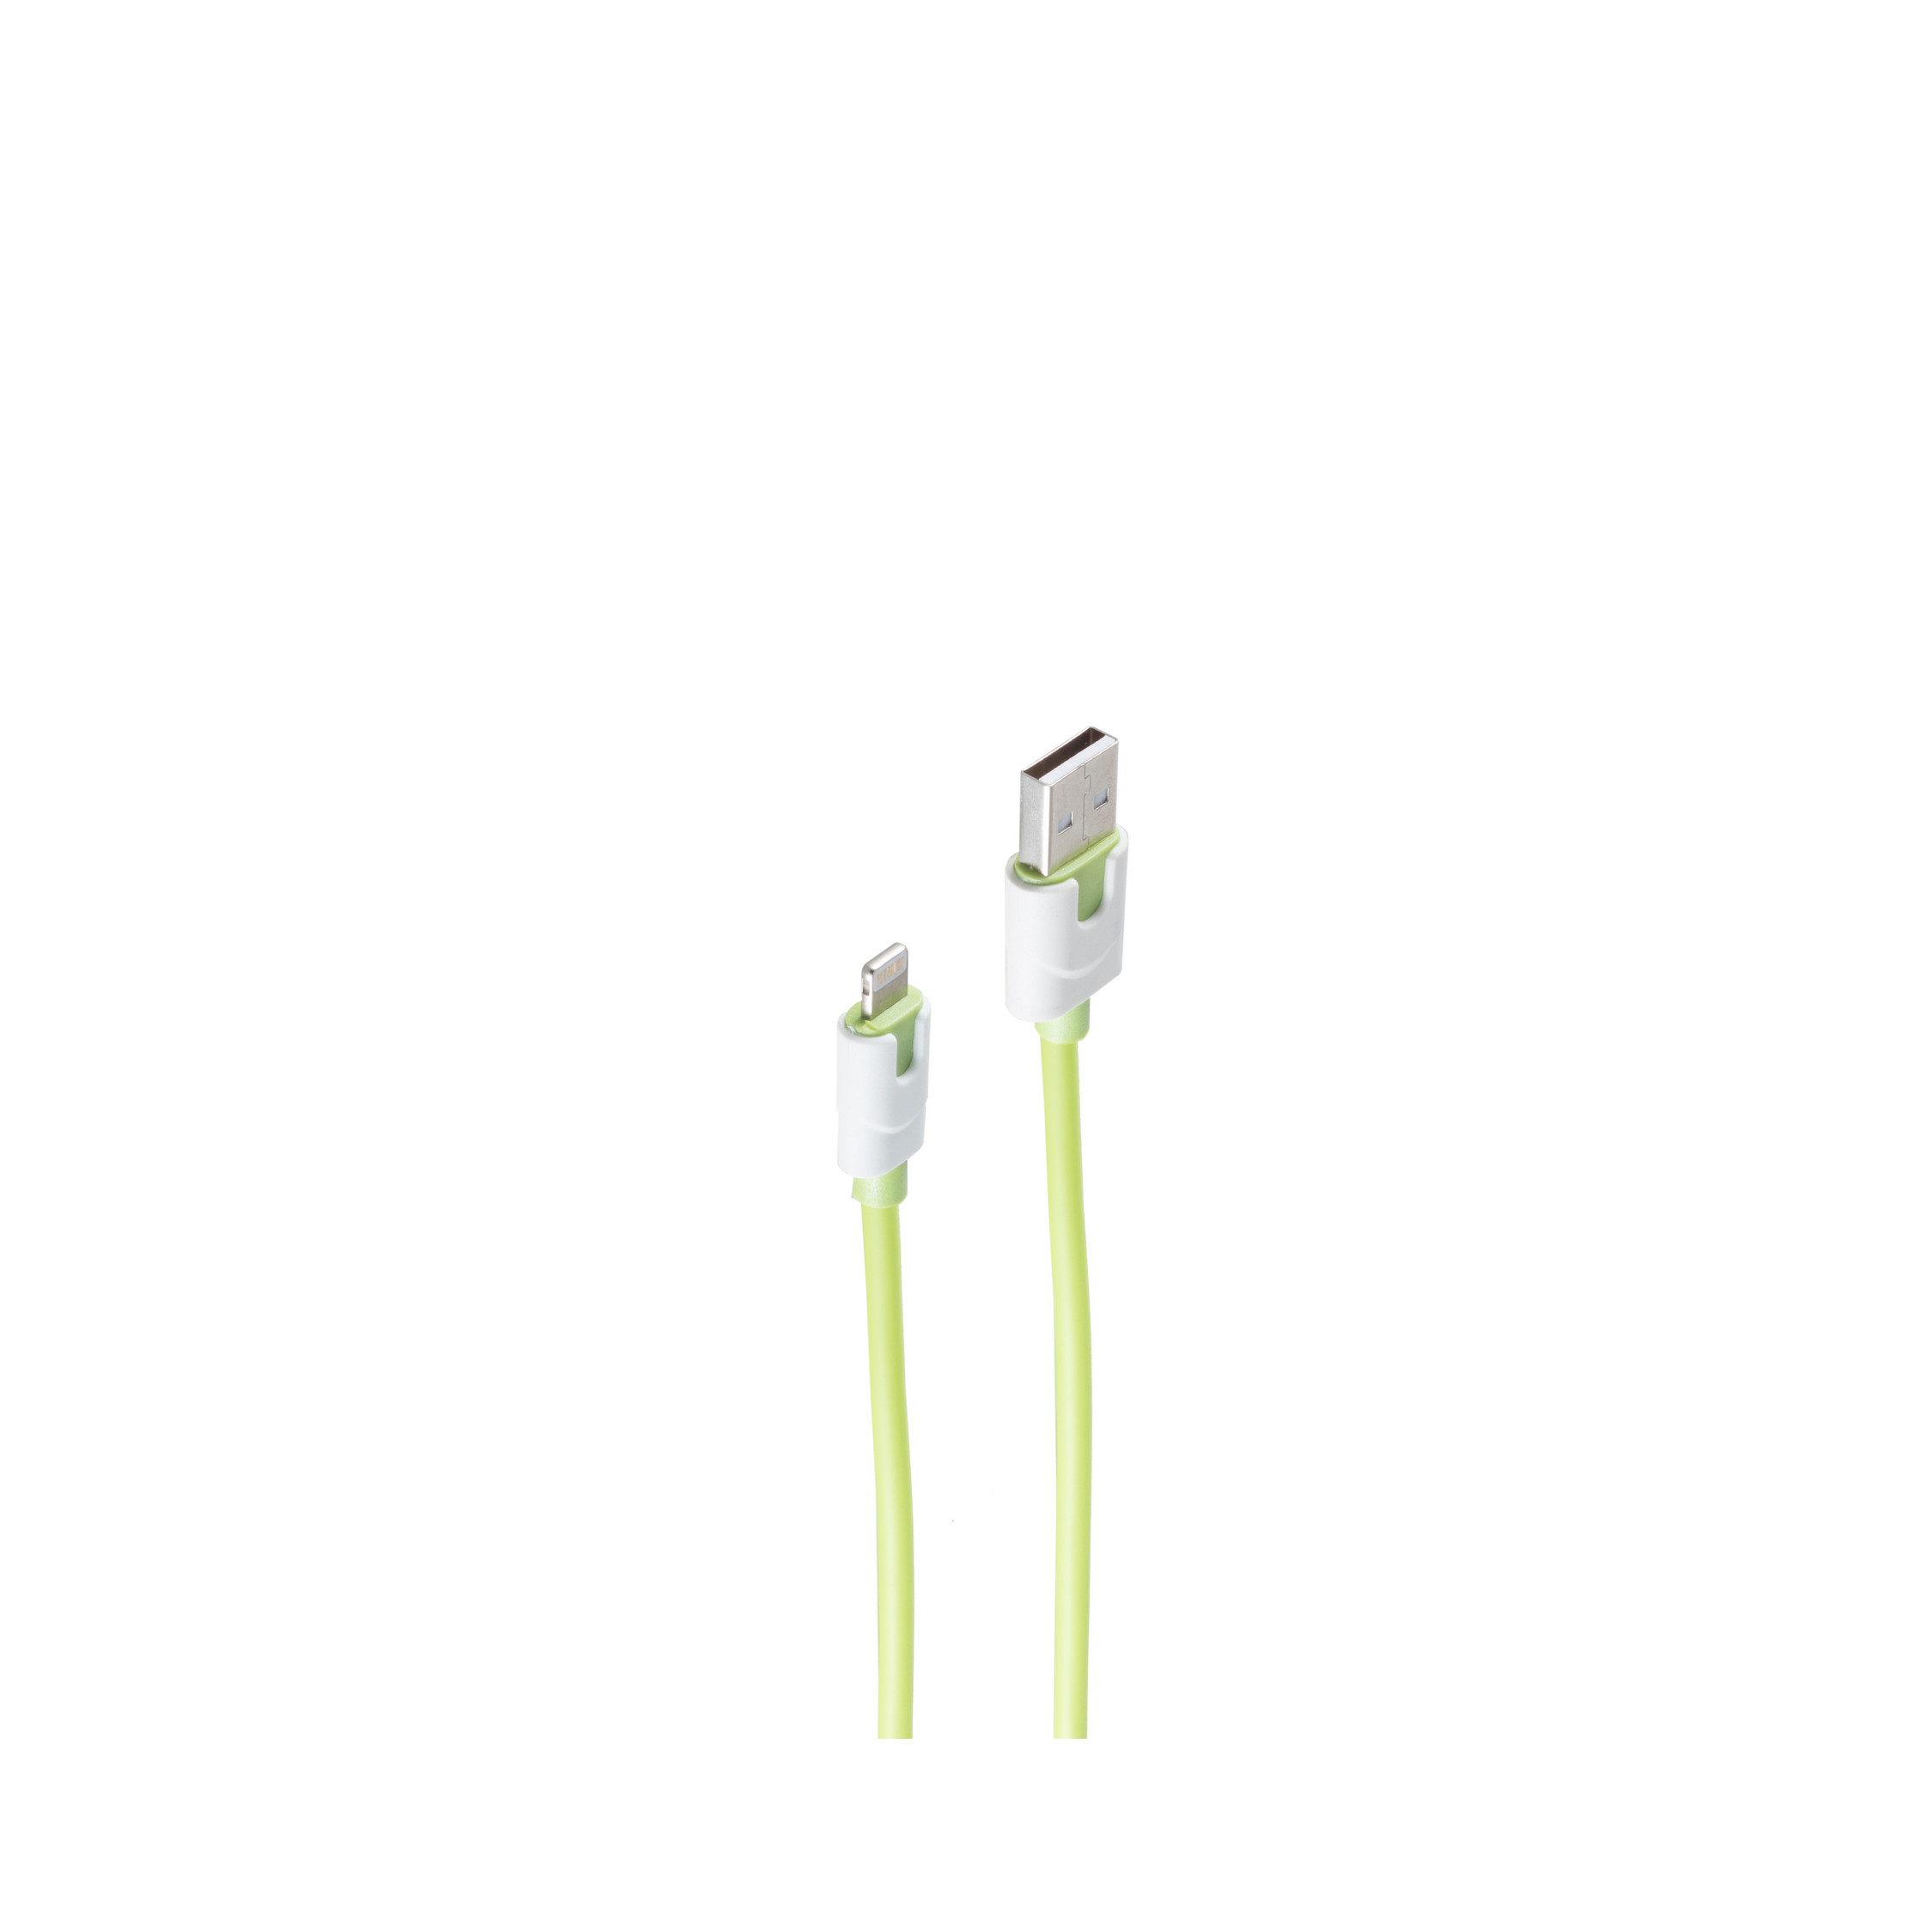 auf USB grün Stecker m, grün, Stecker USB-Ladekabel 2 8-pin 2m, A Ladekabel, SHIVERPEAKS